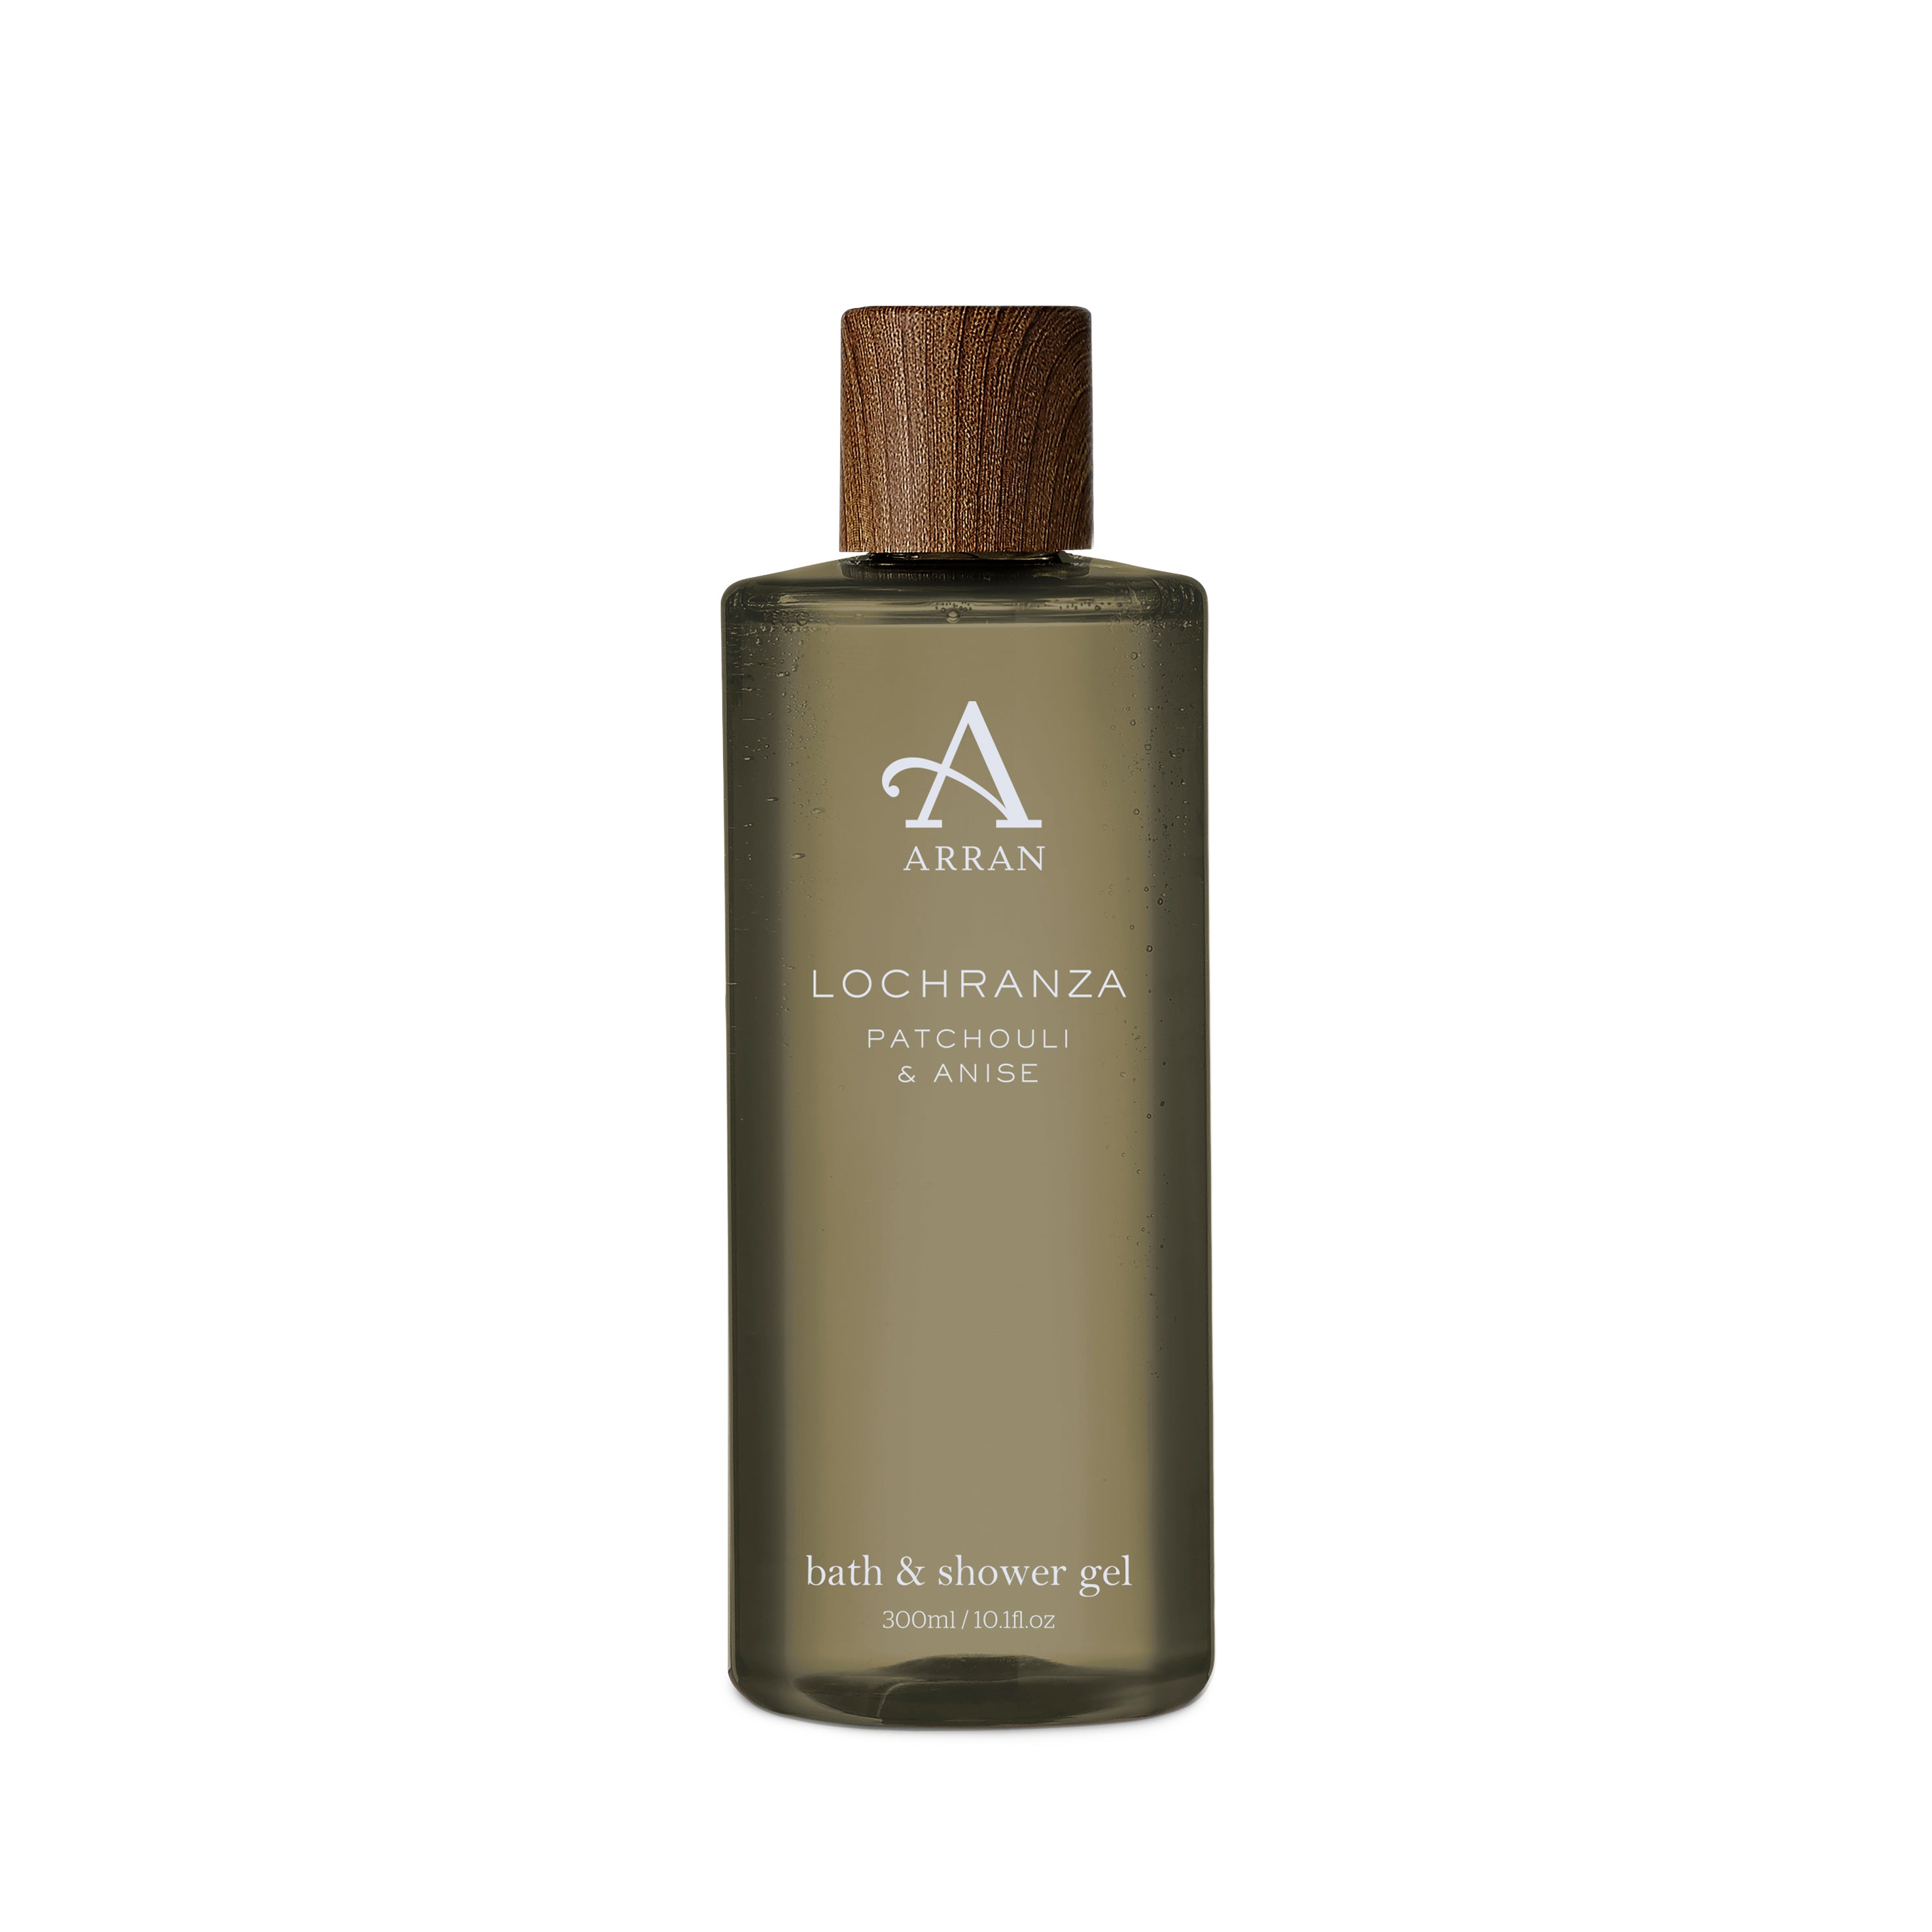 An image of ARRAN Lochranza Men's Bath & Shower Gel | Made in Scotland | Patchouli & Anise S...